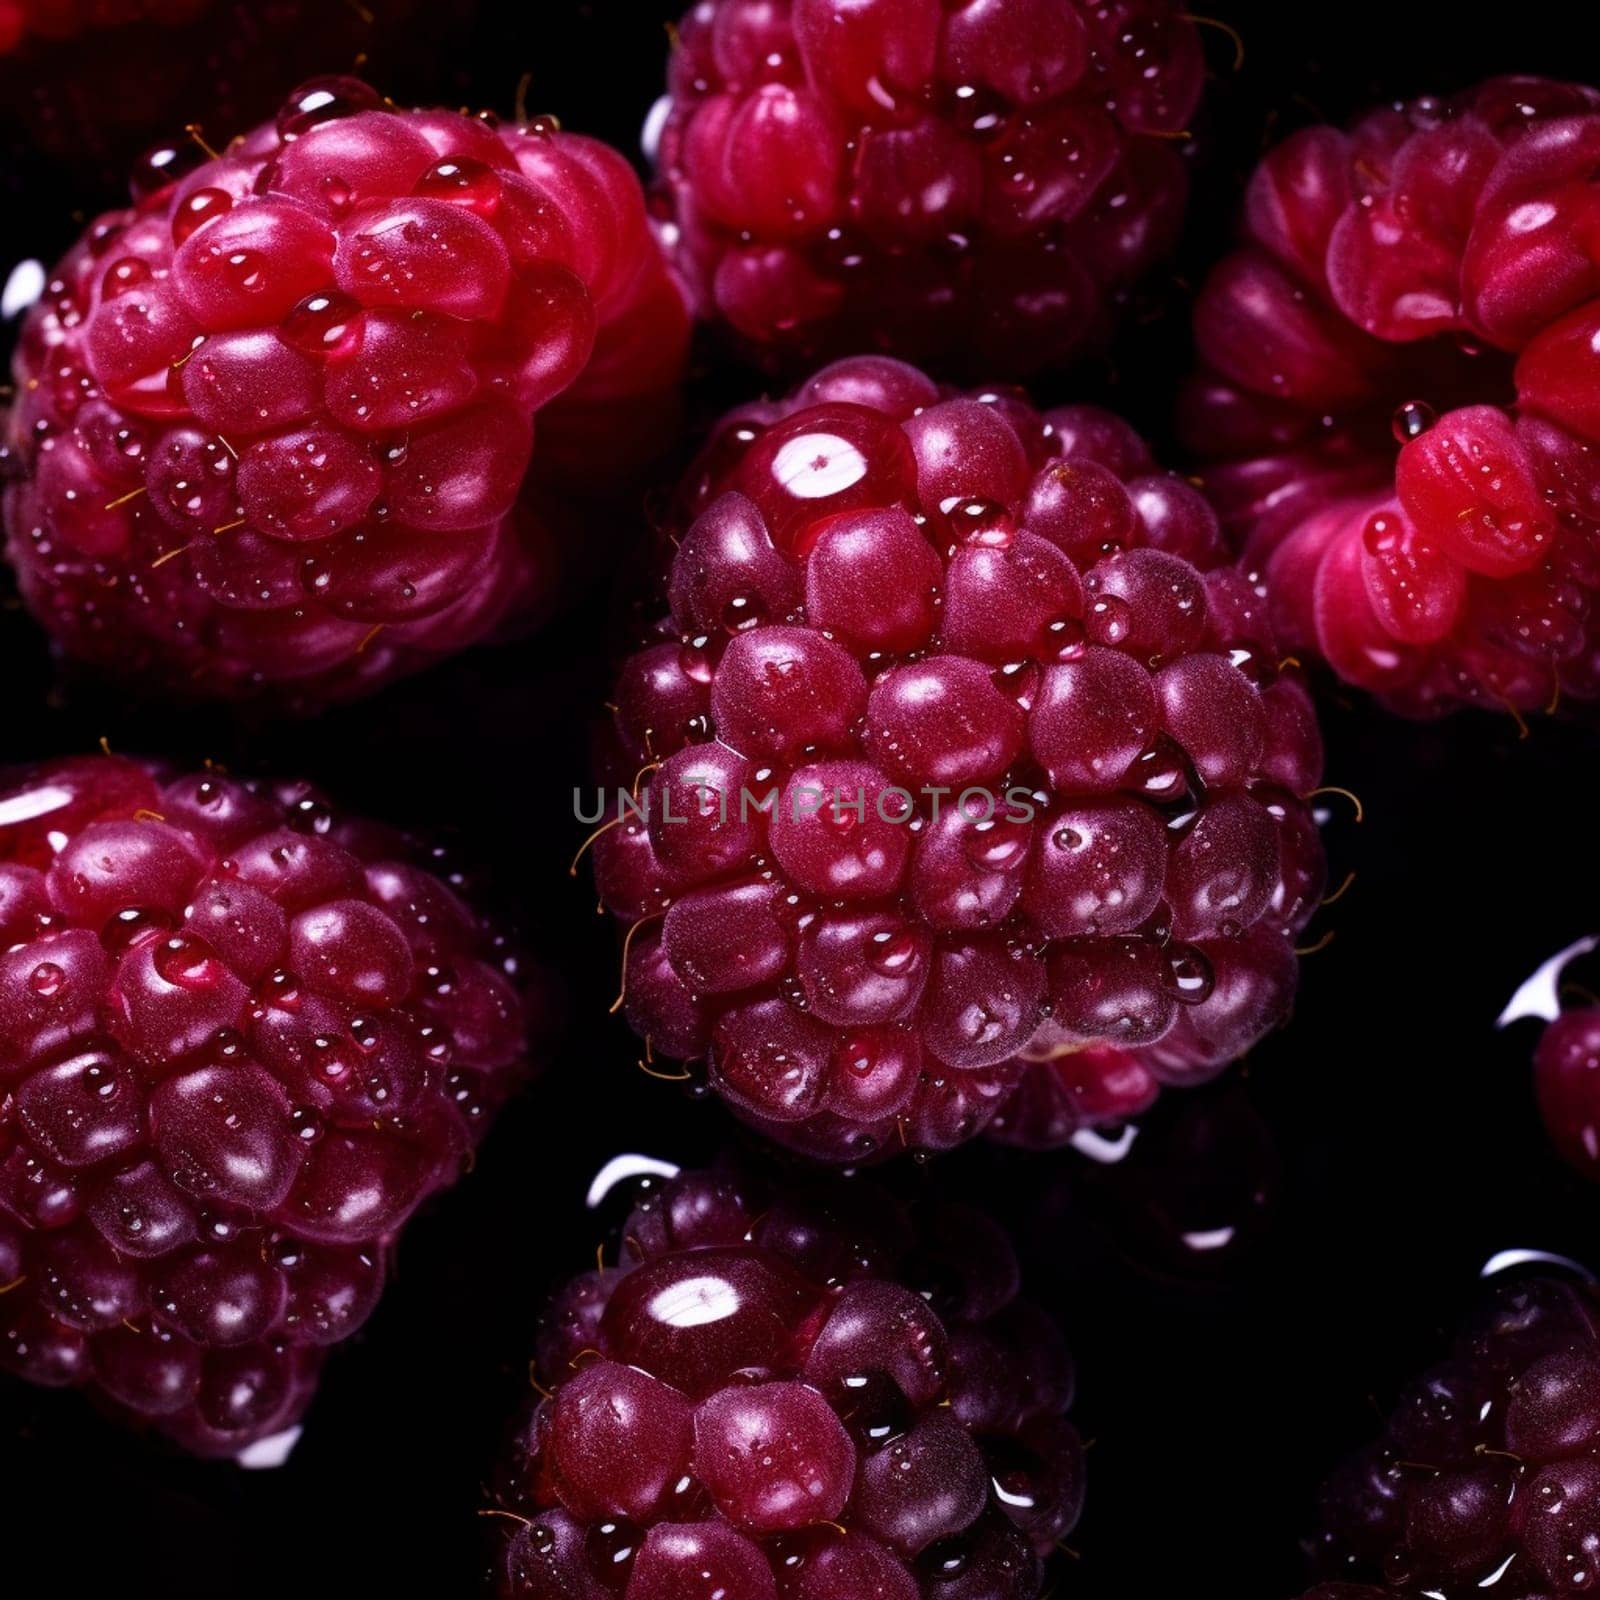 Juicy raspberries macro photography. High quality photo